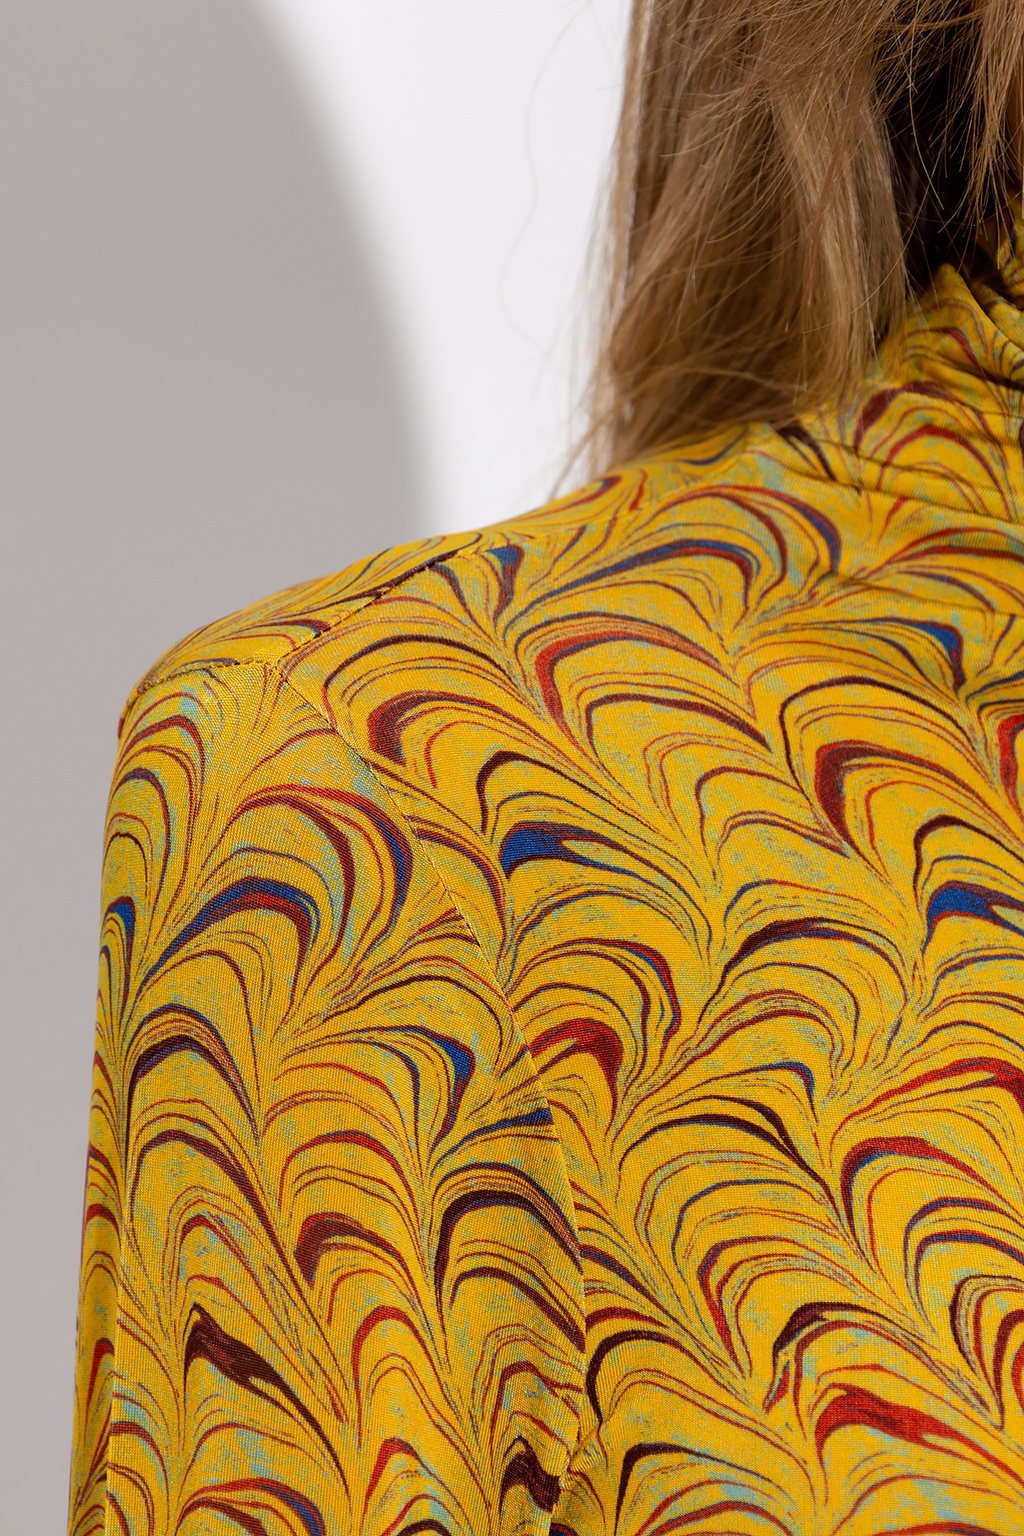 Ulla Johnson ‘Aurelia’ patterned turtleneck sweater